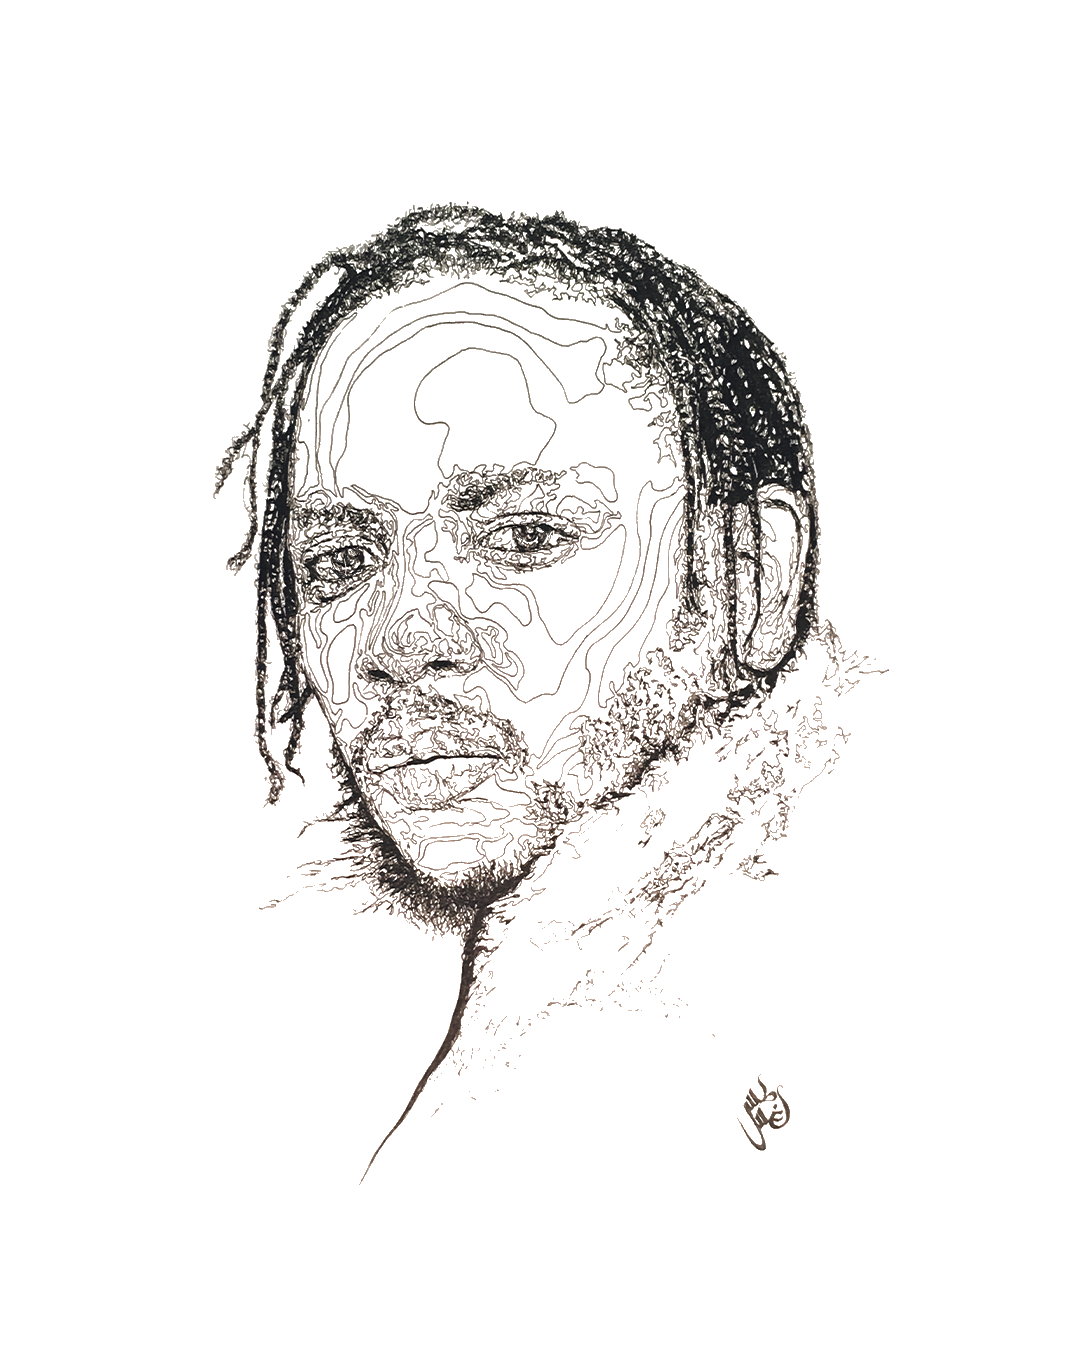 Kendrick Lamar art by Augustus Rivers Brightman